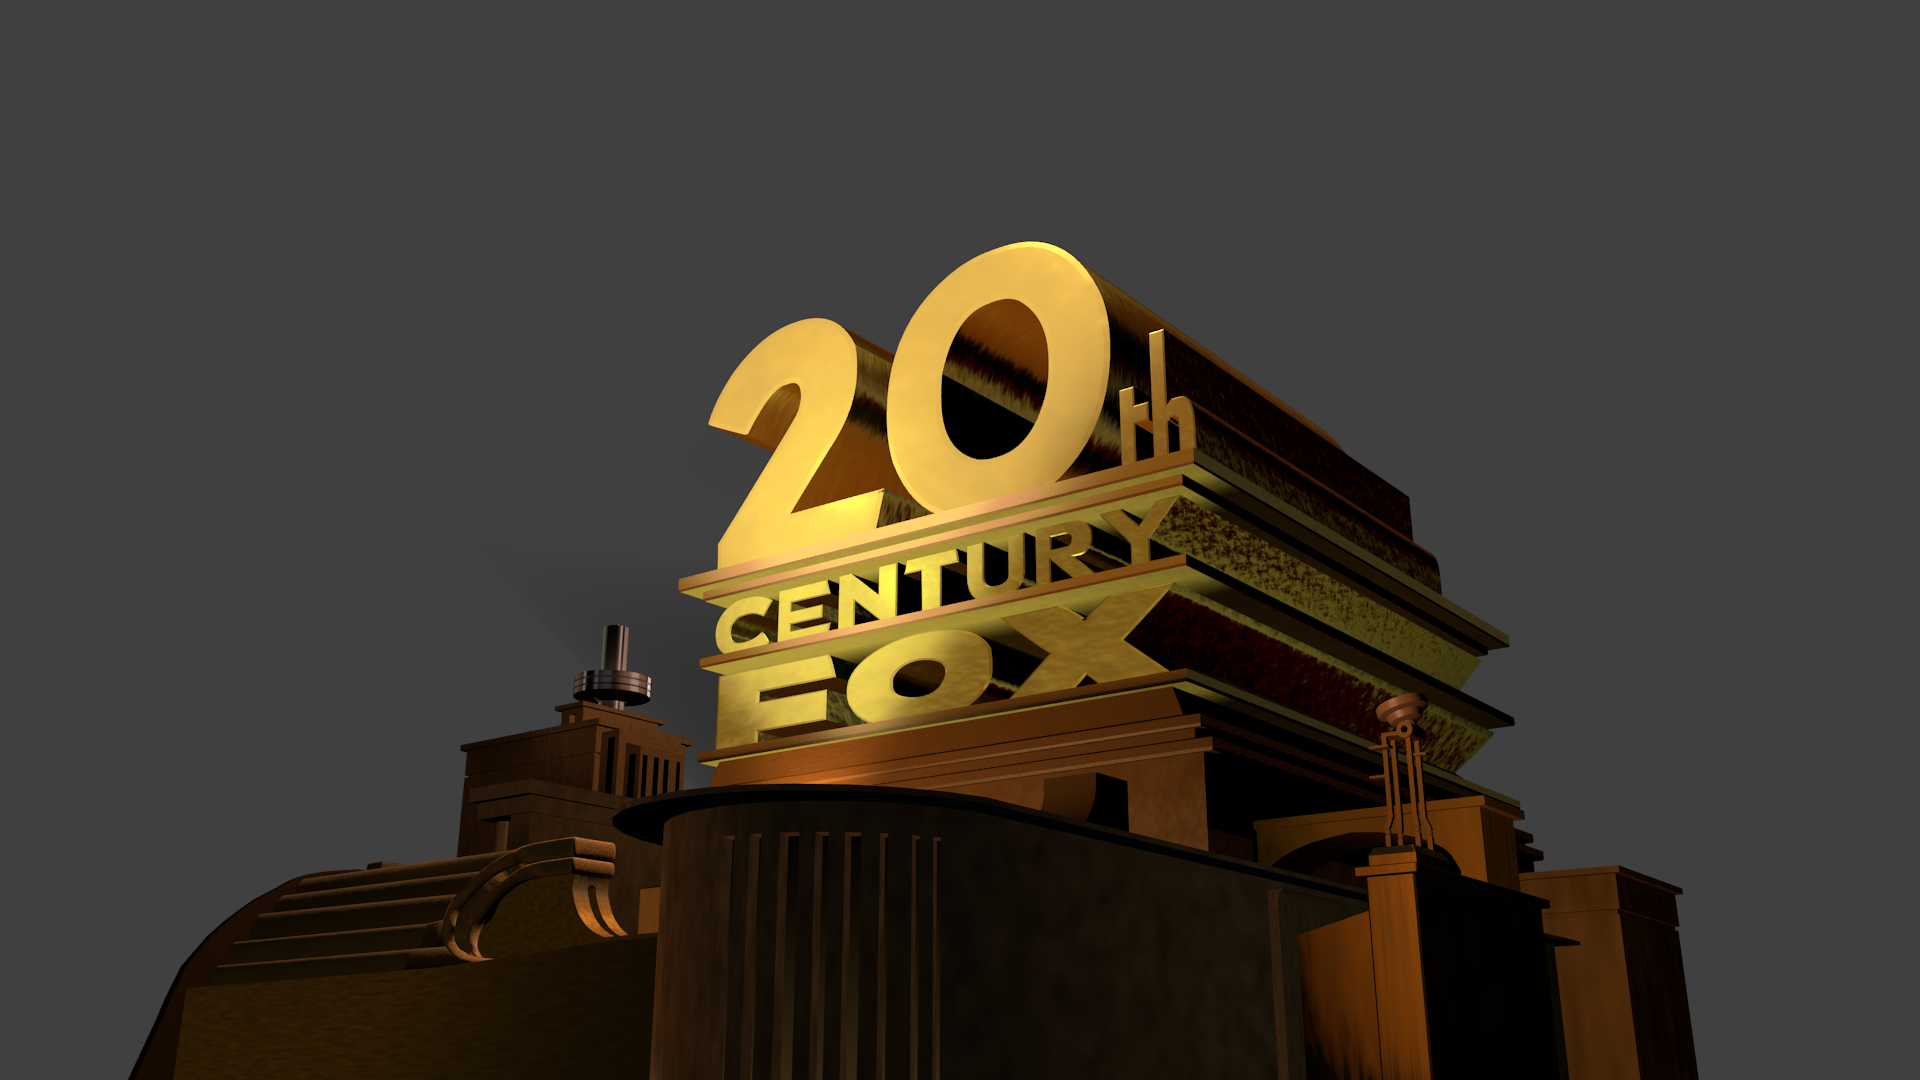 20 Век Центури Фокс. 20th Century Fox logo. 20 Студия Фокс. 20 Век Фокс телевизион. 20 th century